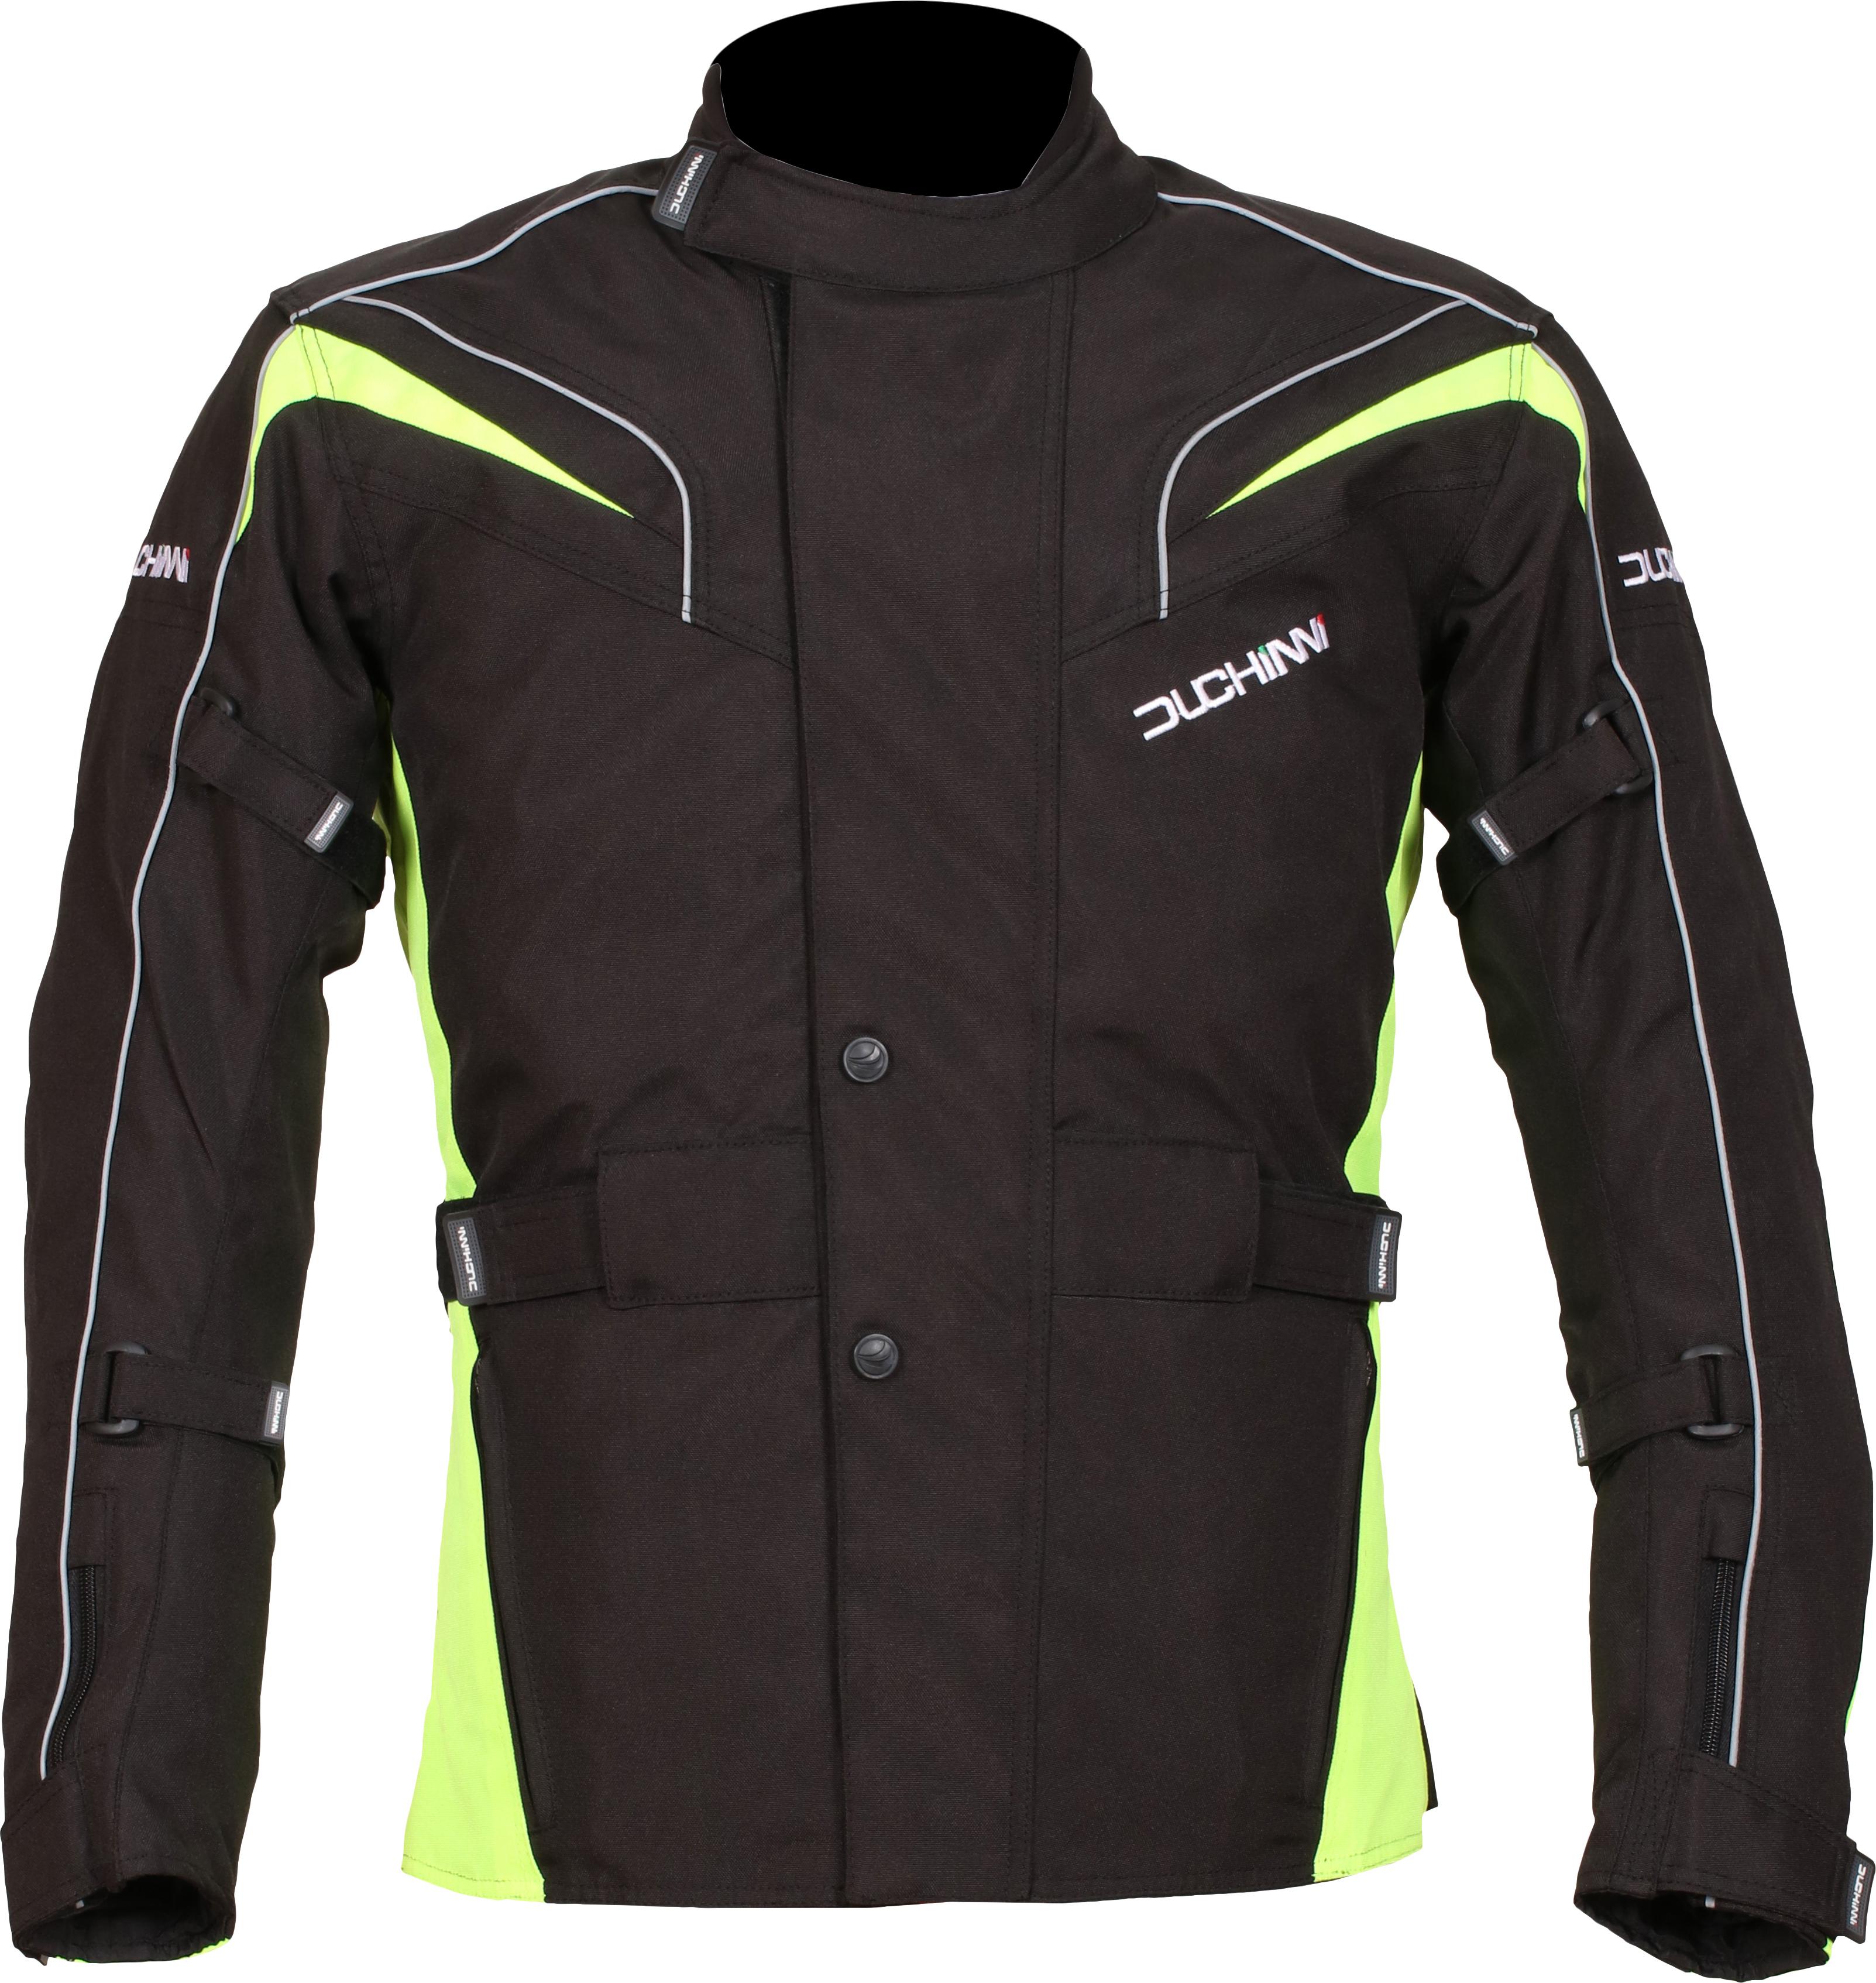 Duchinni Hurricane Motorcycle Jacket - Black And Neon, M